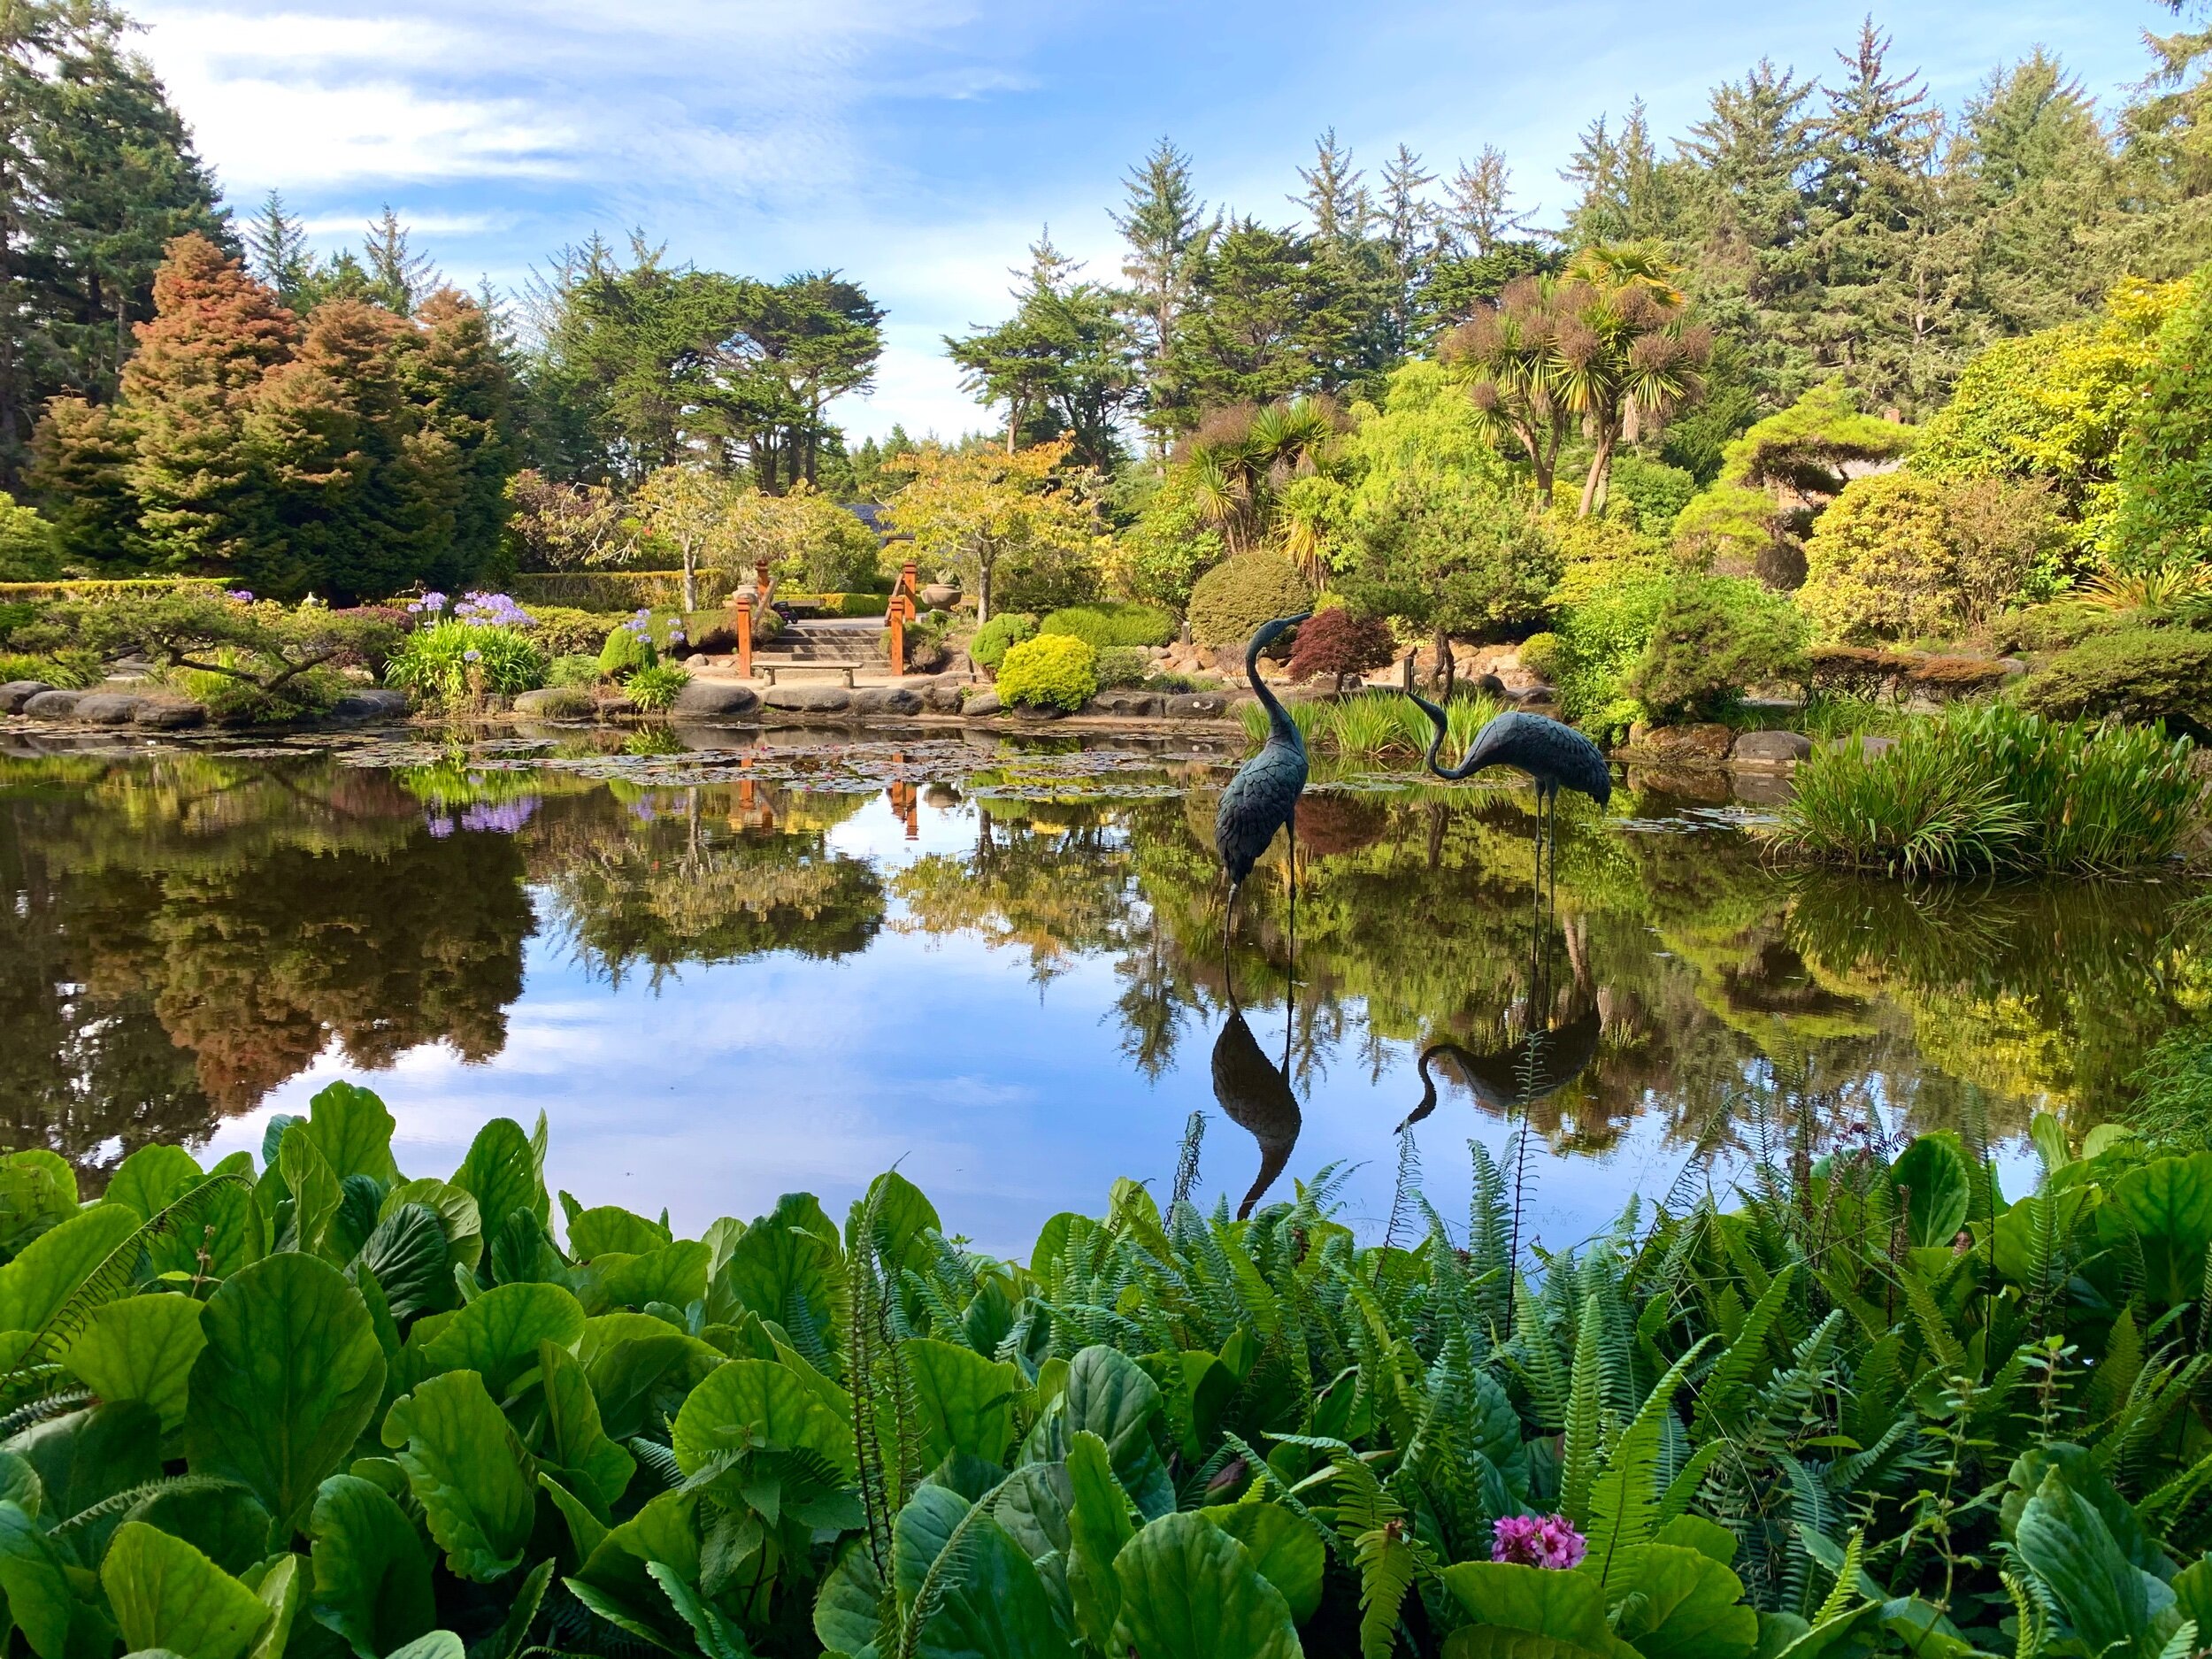  Shore Acres State Park also featured a dreamy botanical garden.  